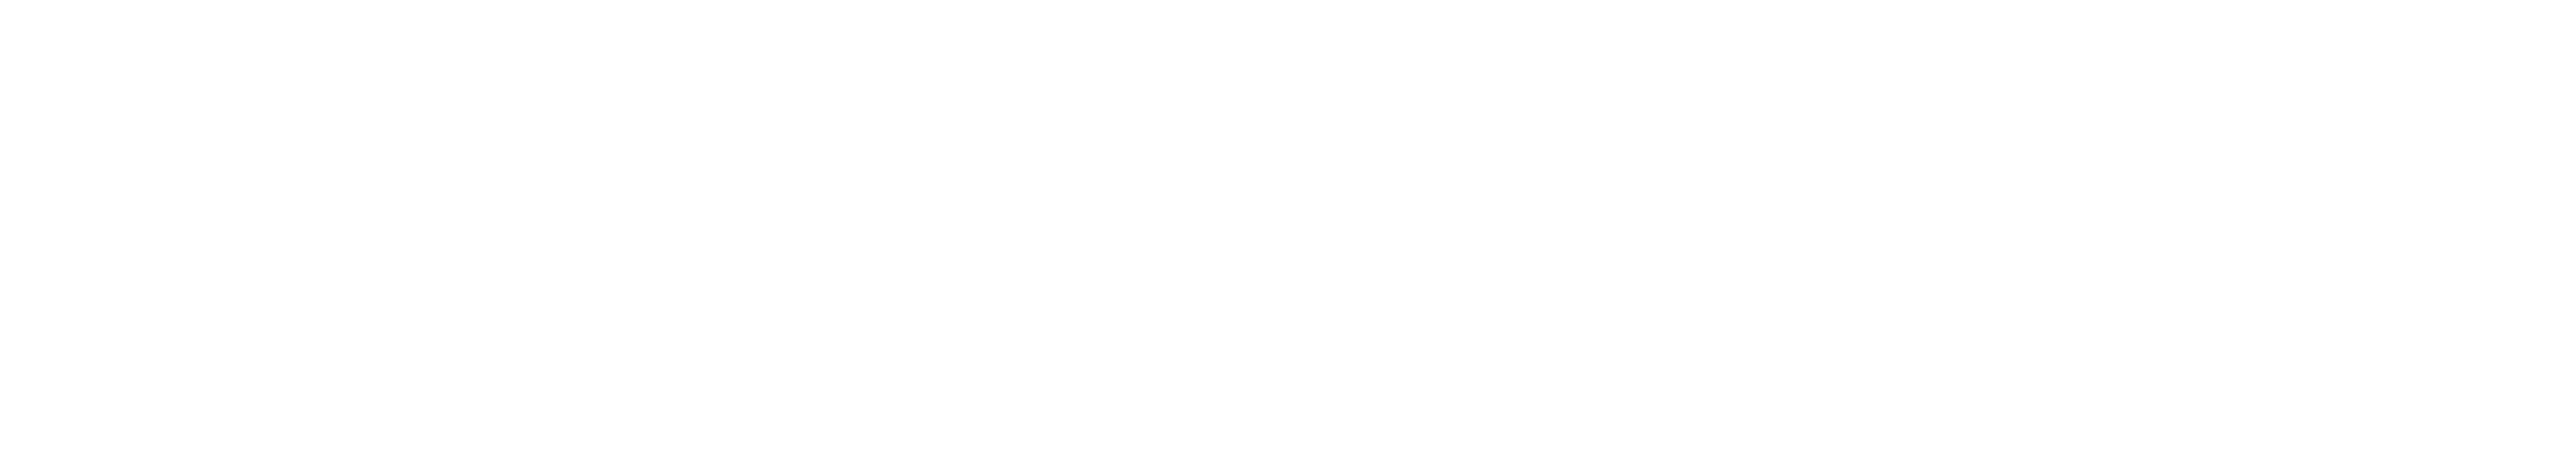 Landscape - Figured Partner Awards Logo - white